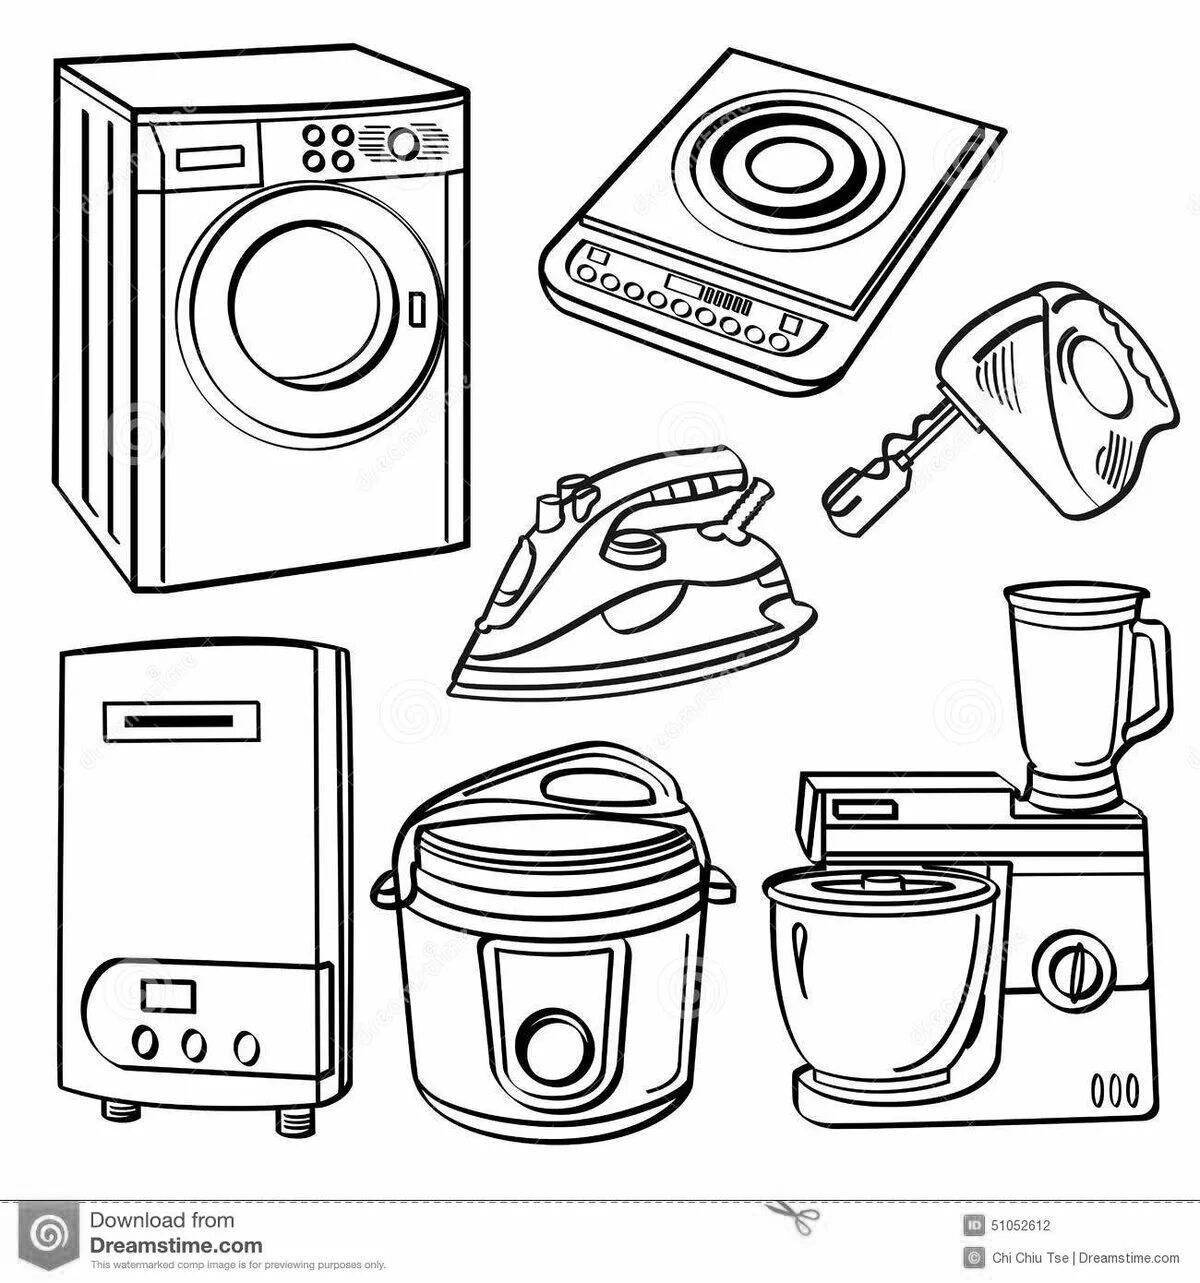 Color-explosion household appliances coloring book for kindergarten